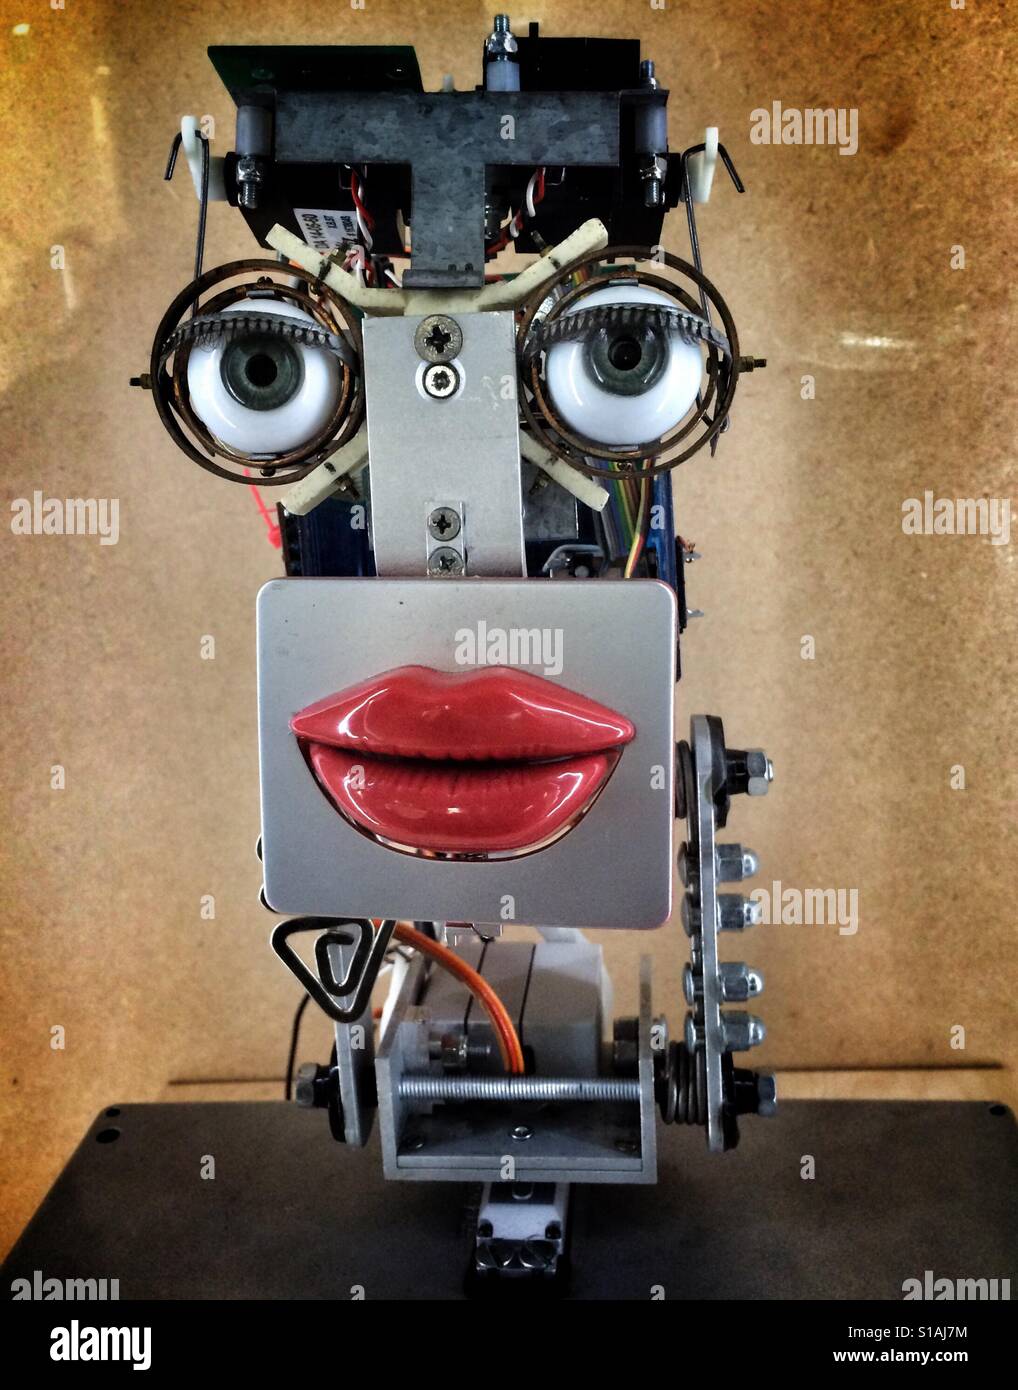 Funny robot fotografías e imágenes de alta resolución - Alamy